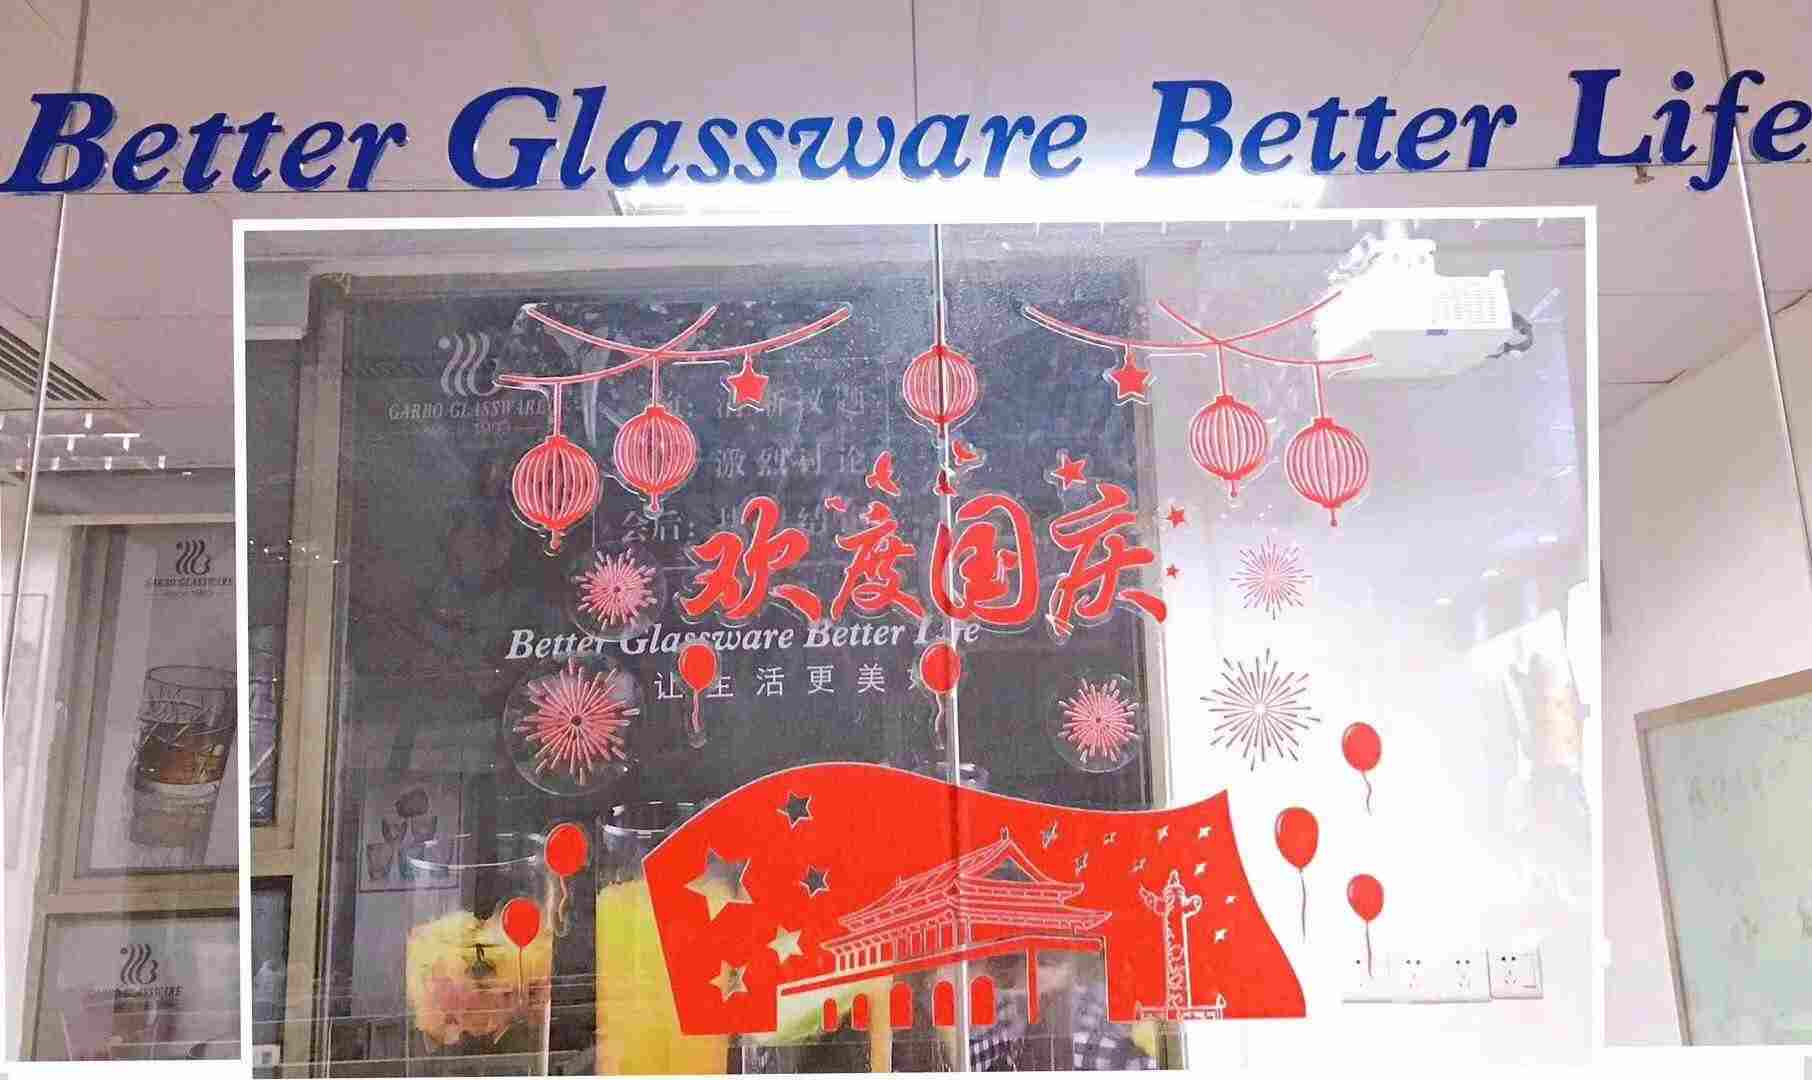 Garbo Glassware 国民の祝日に関するお知らせ